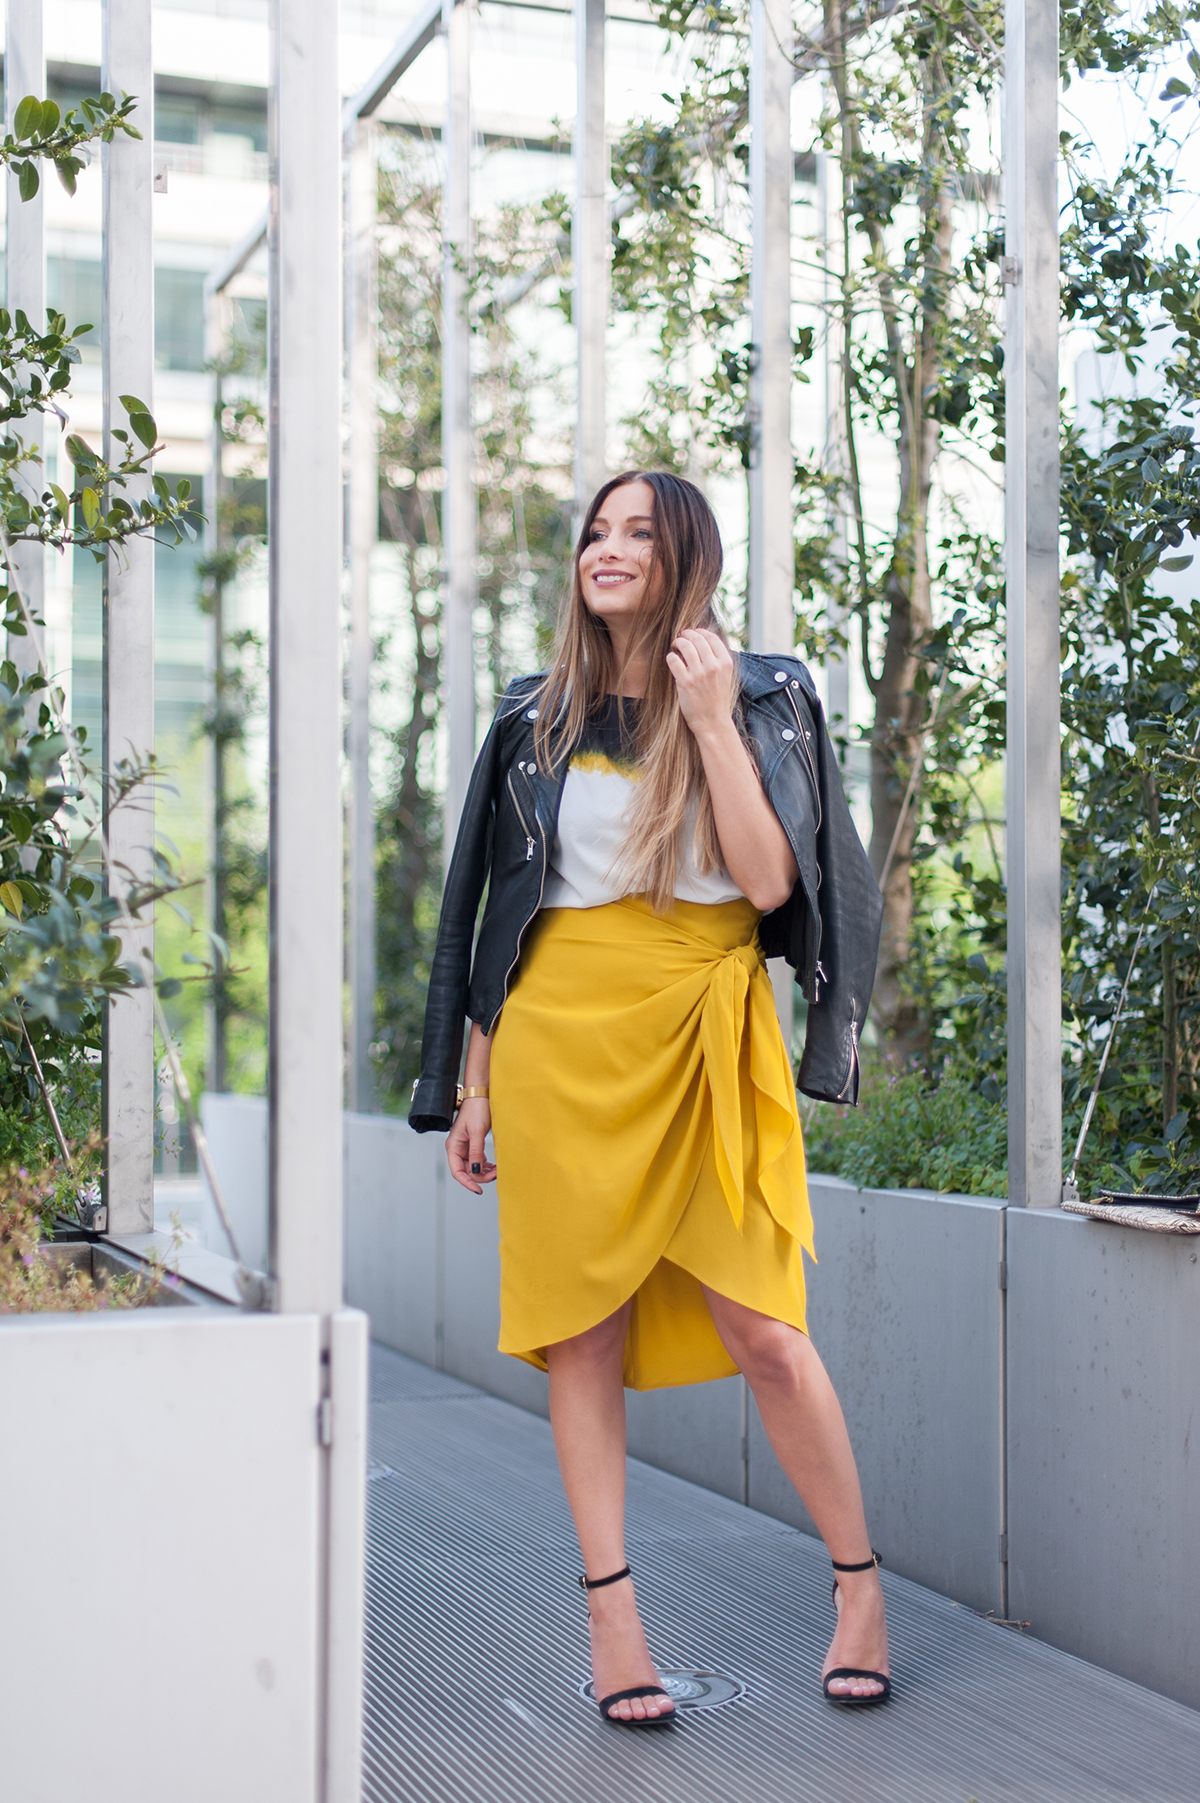 comment porter la jupe portefeuille blog mode